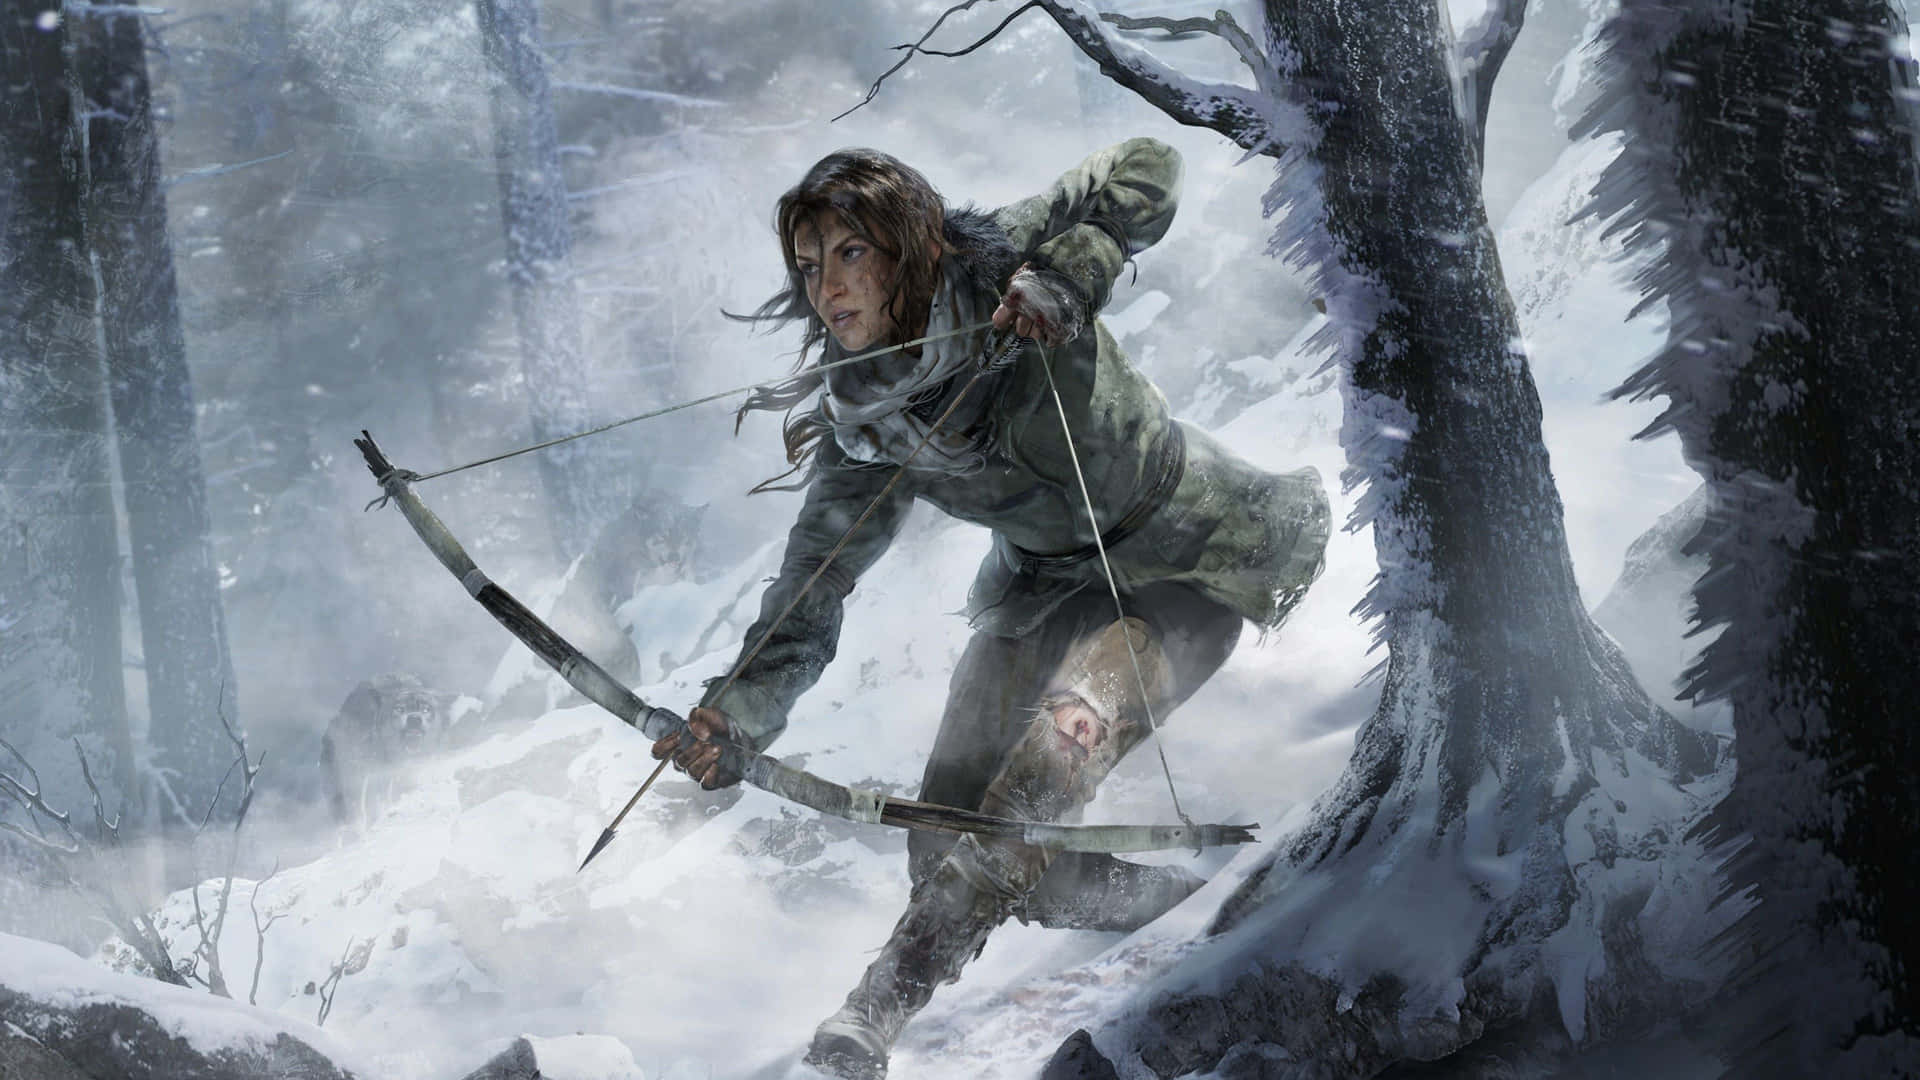 Lara Croft Winter Survival Archery Wallpaper